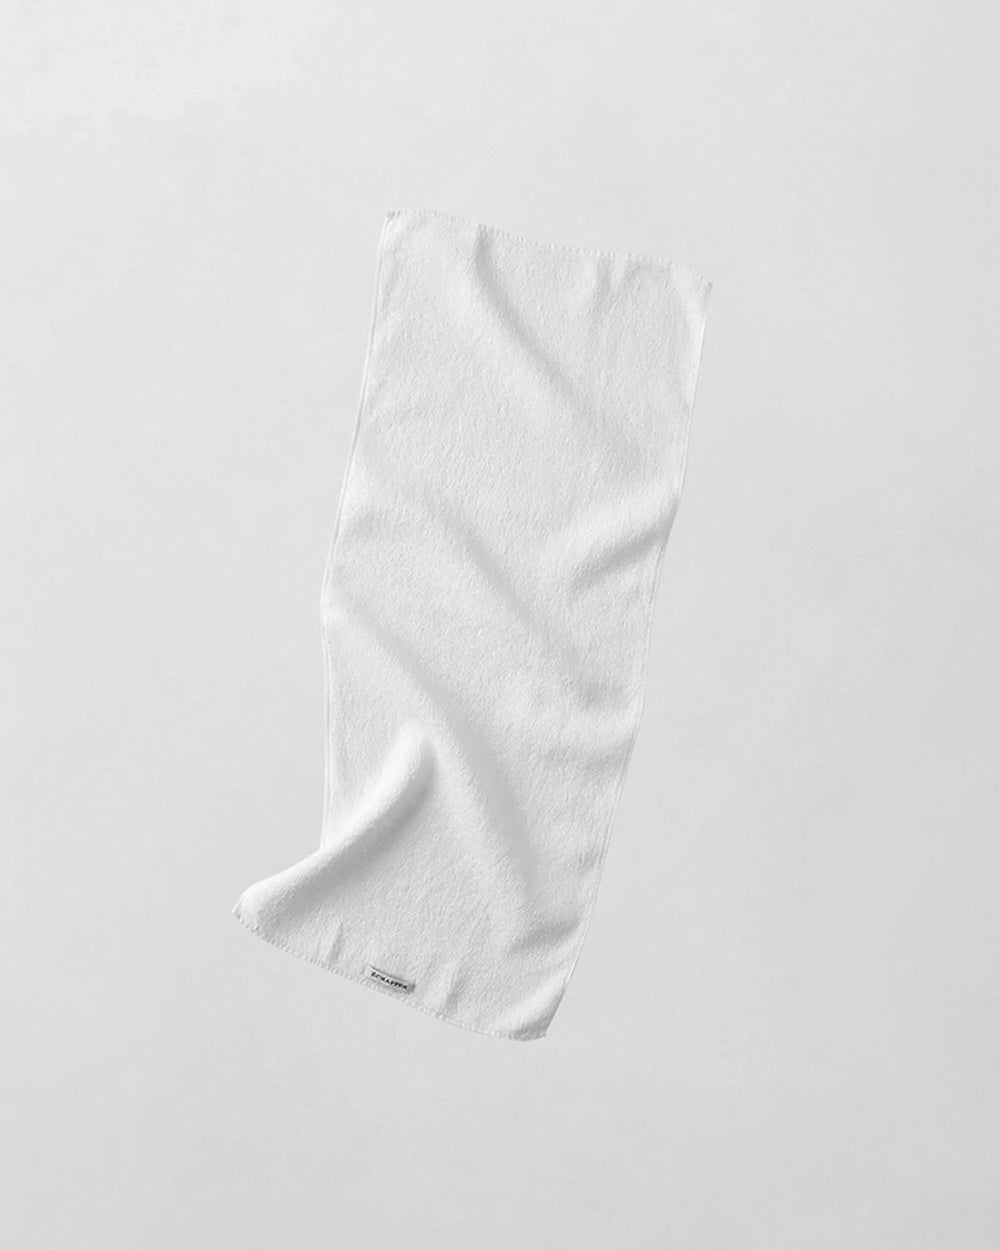 Raw Linen Japanese Face Towel